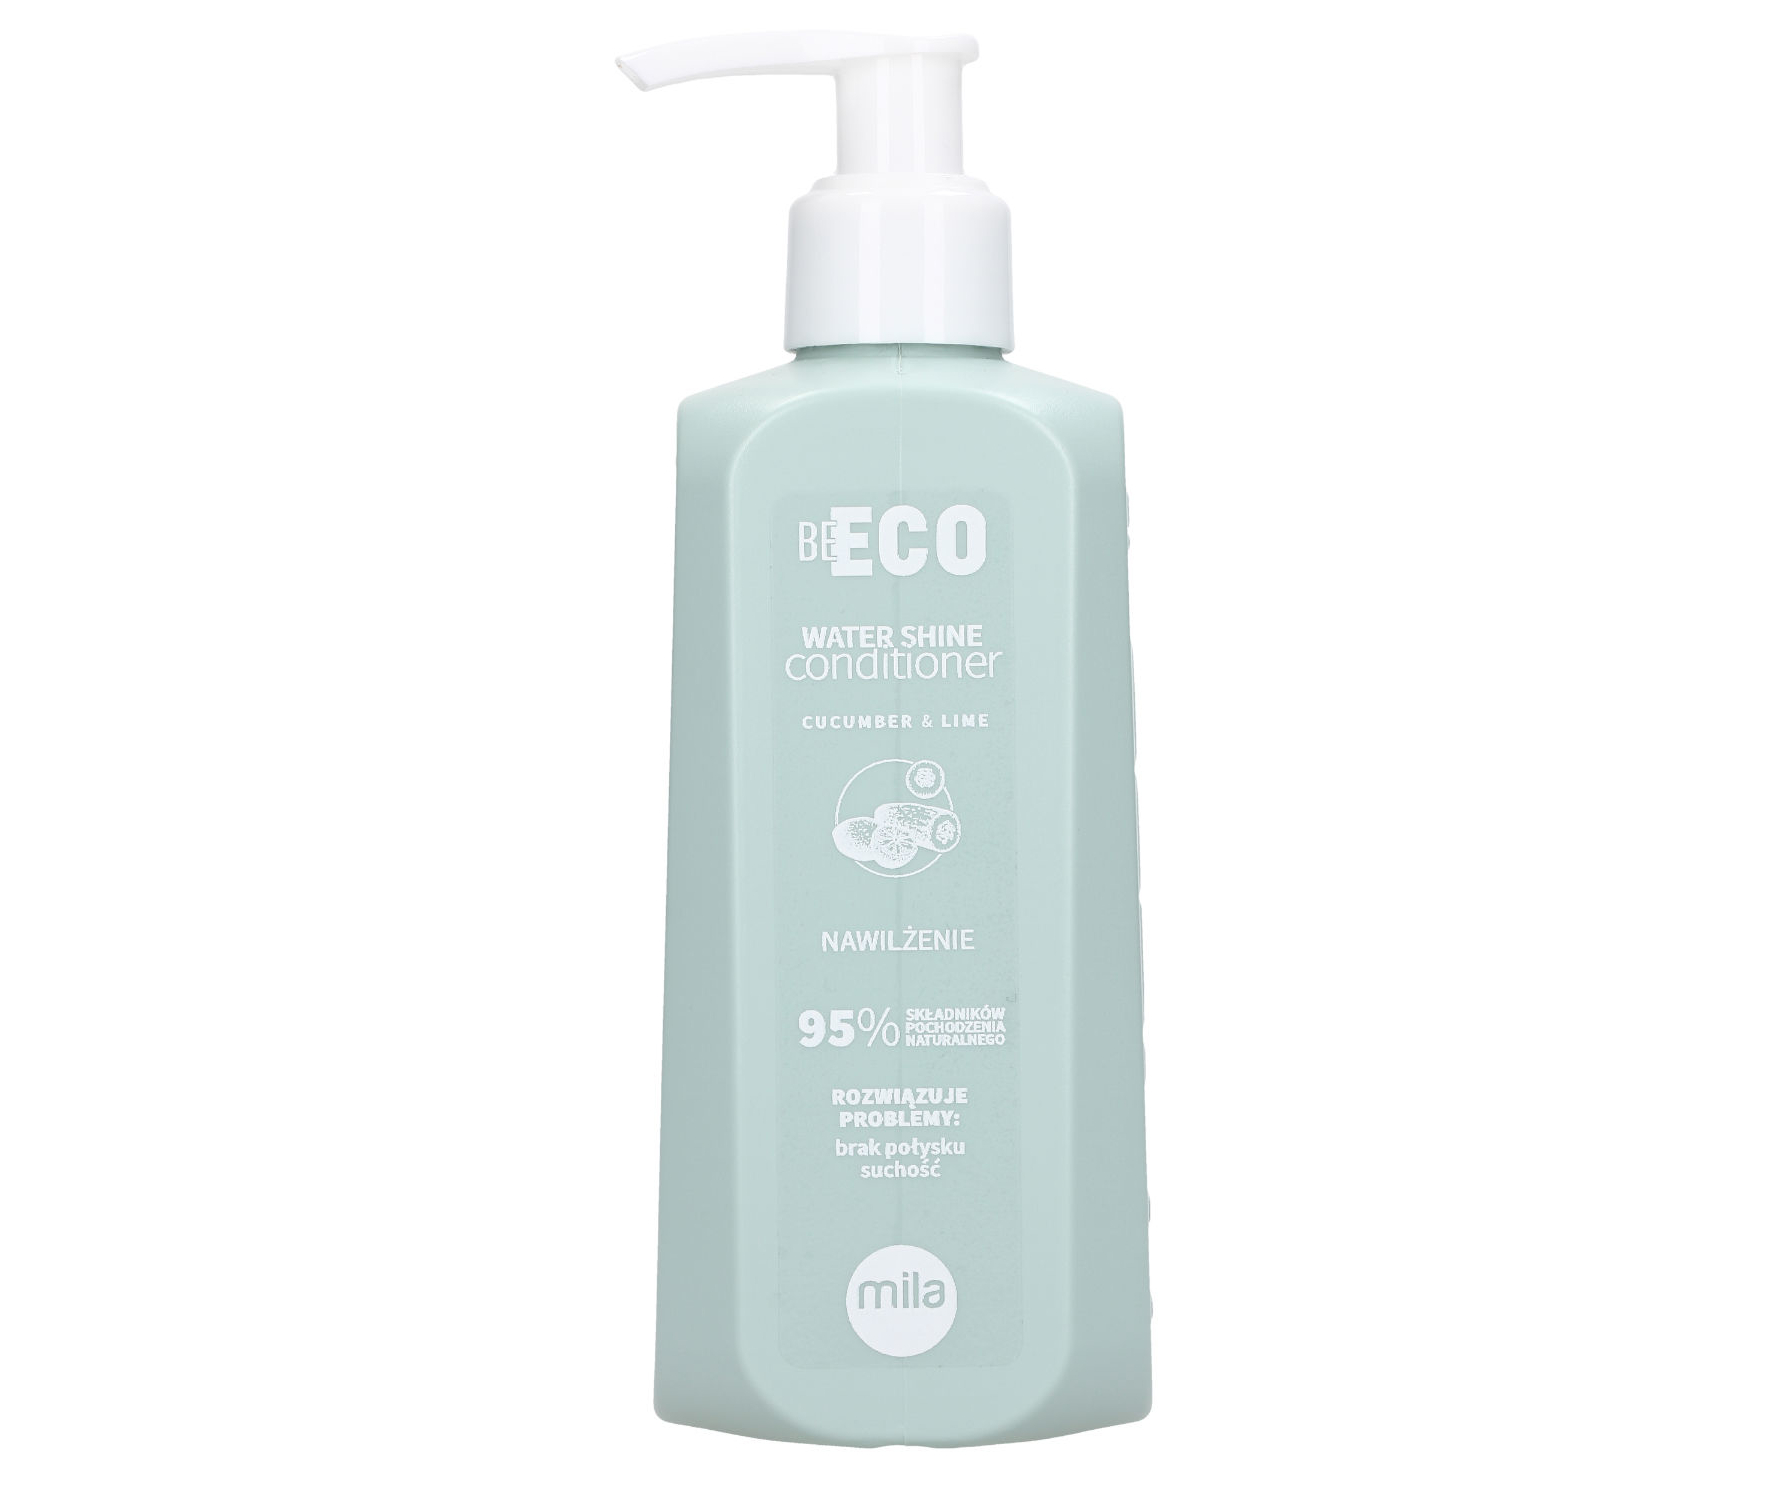 Kondicionér pro suché vlasy Be Eco Water Shine Mila - 250 ml (0105022) + dárek zdarma